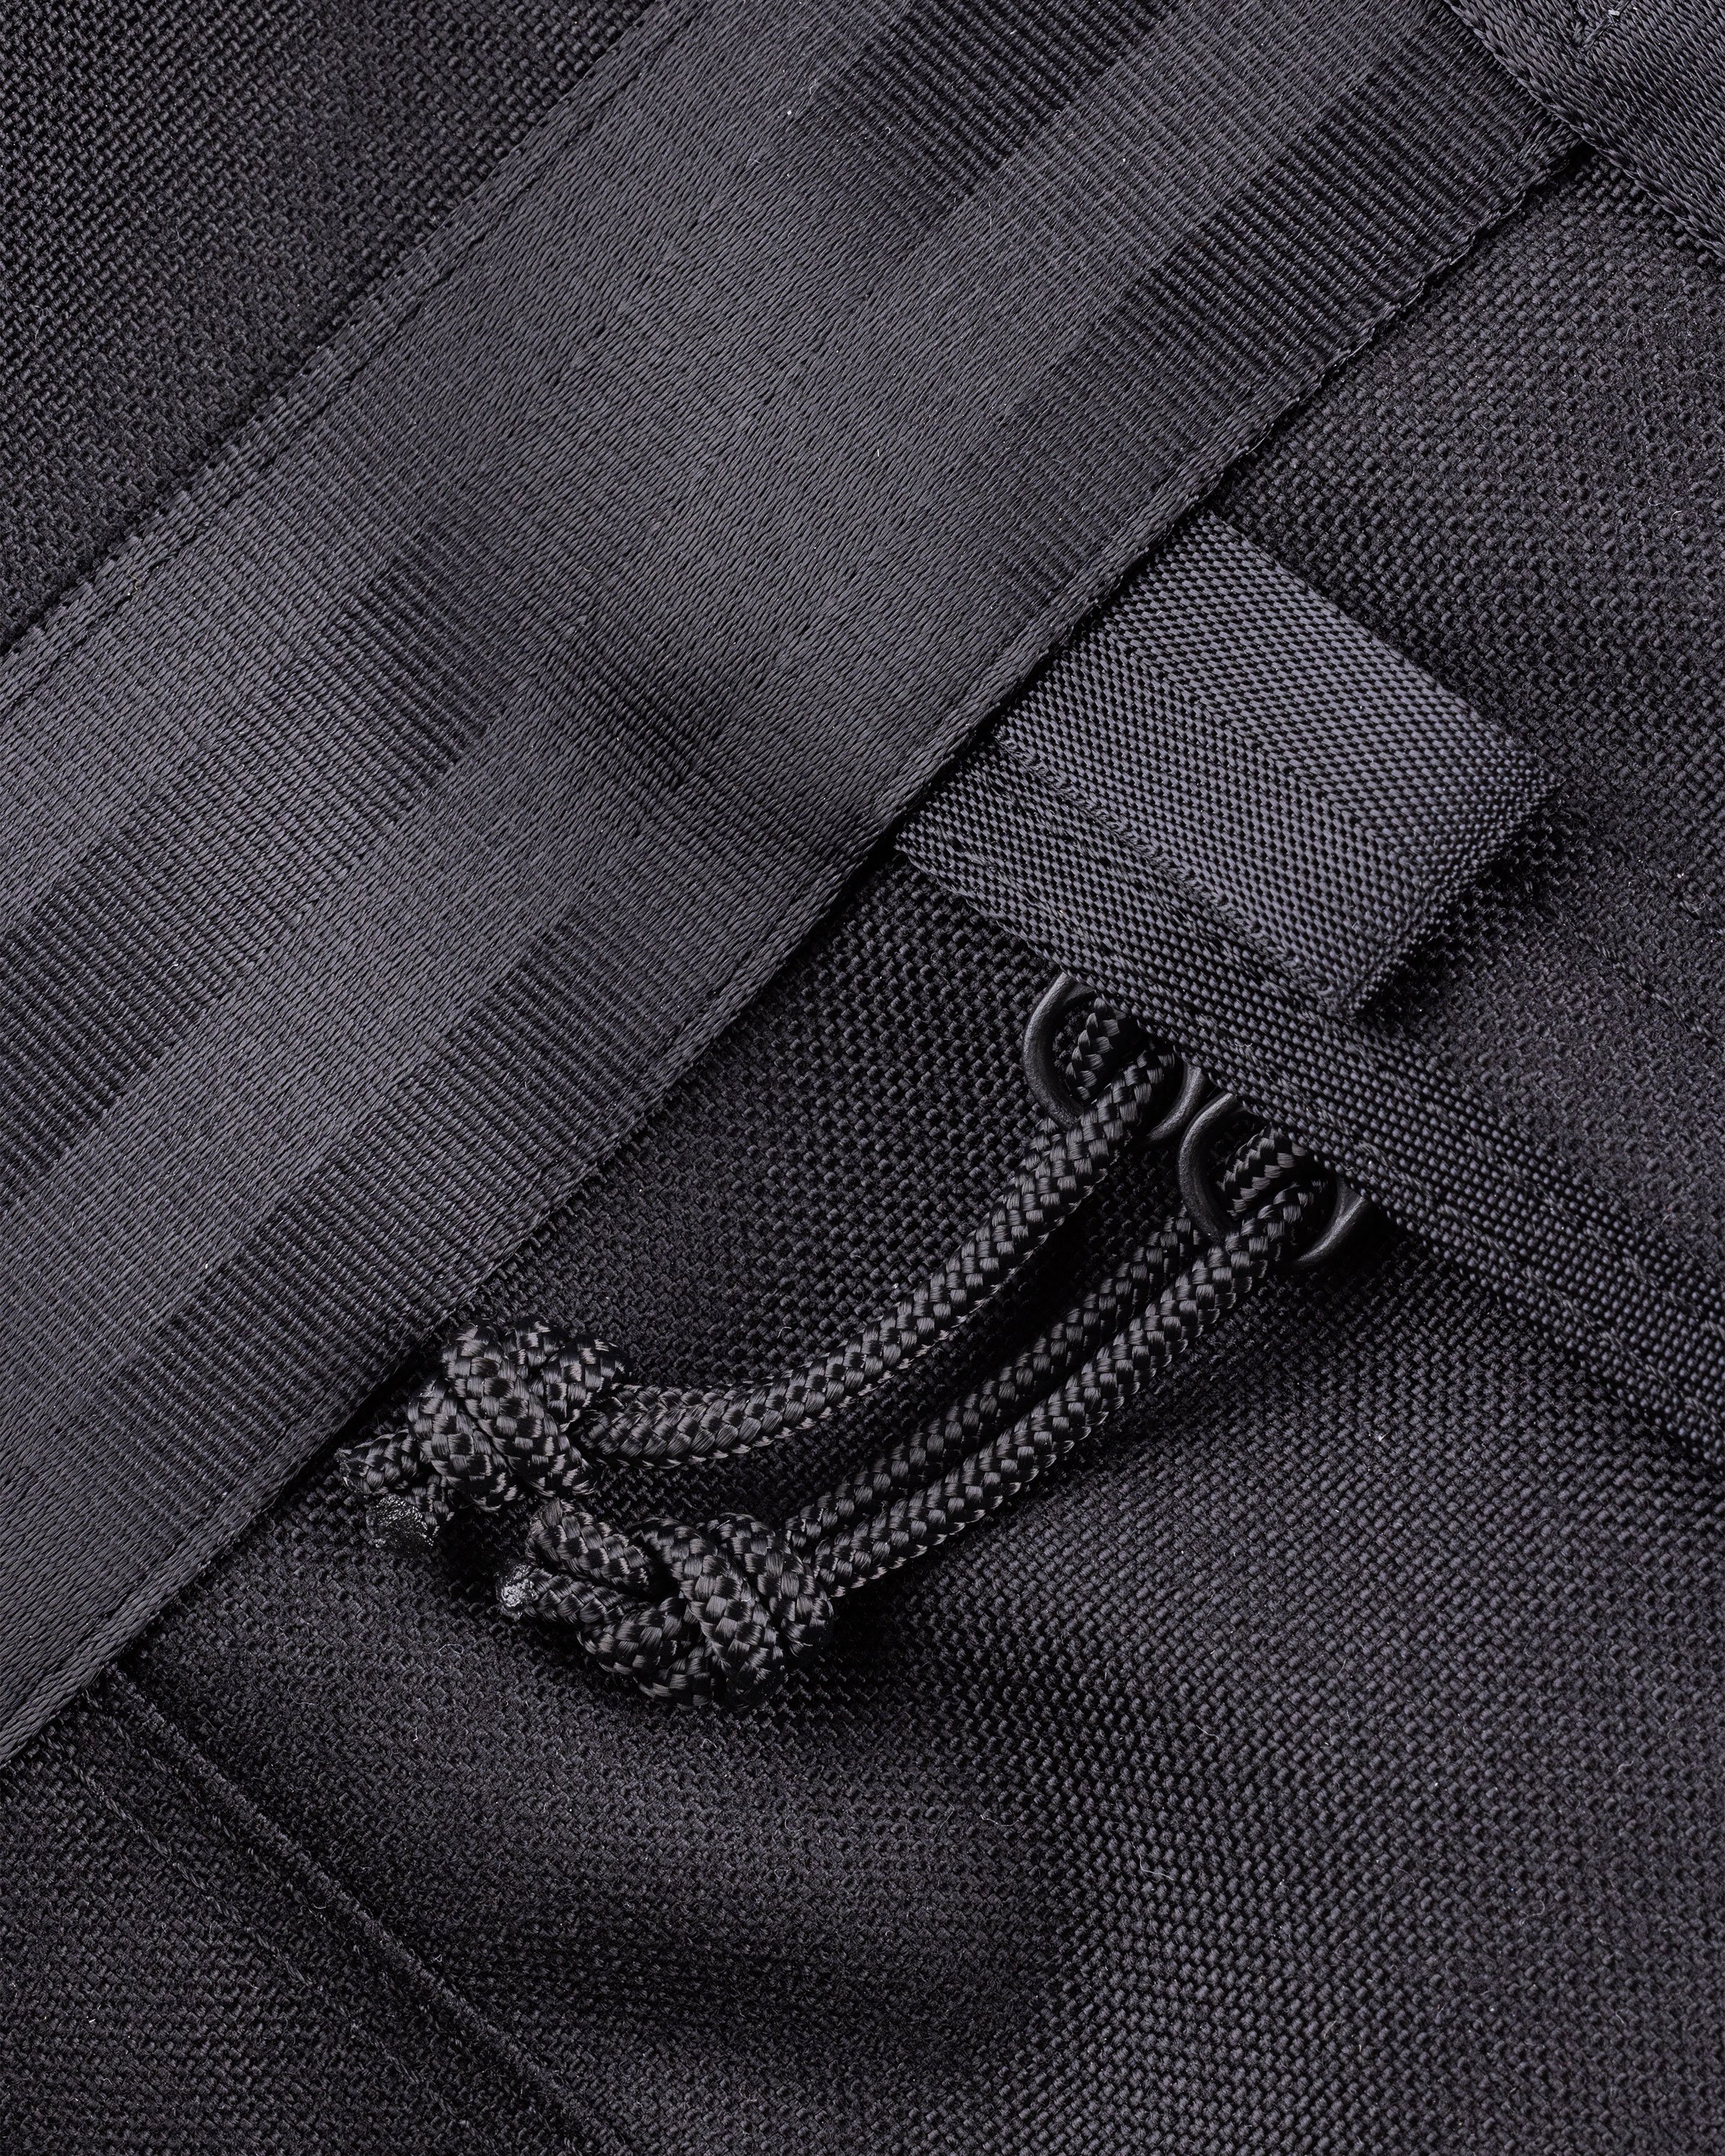 Porter-Yoshida & Co. - Booth Pack 3-Way Duffle Bag Black - Accessories - Black - Image 4